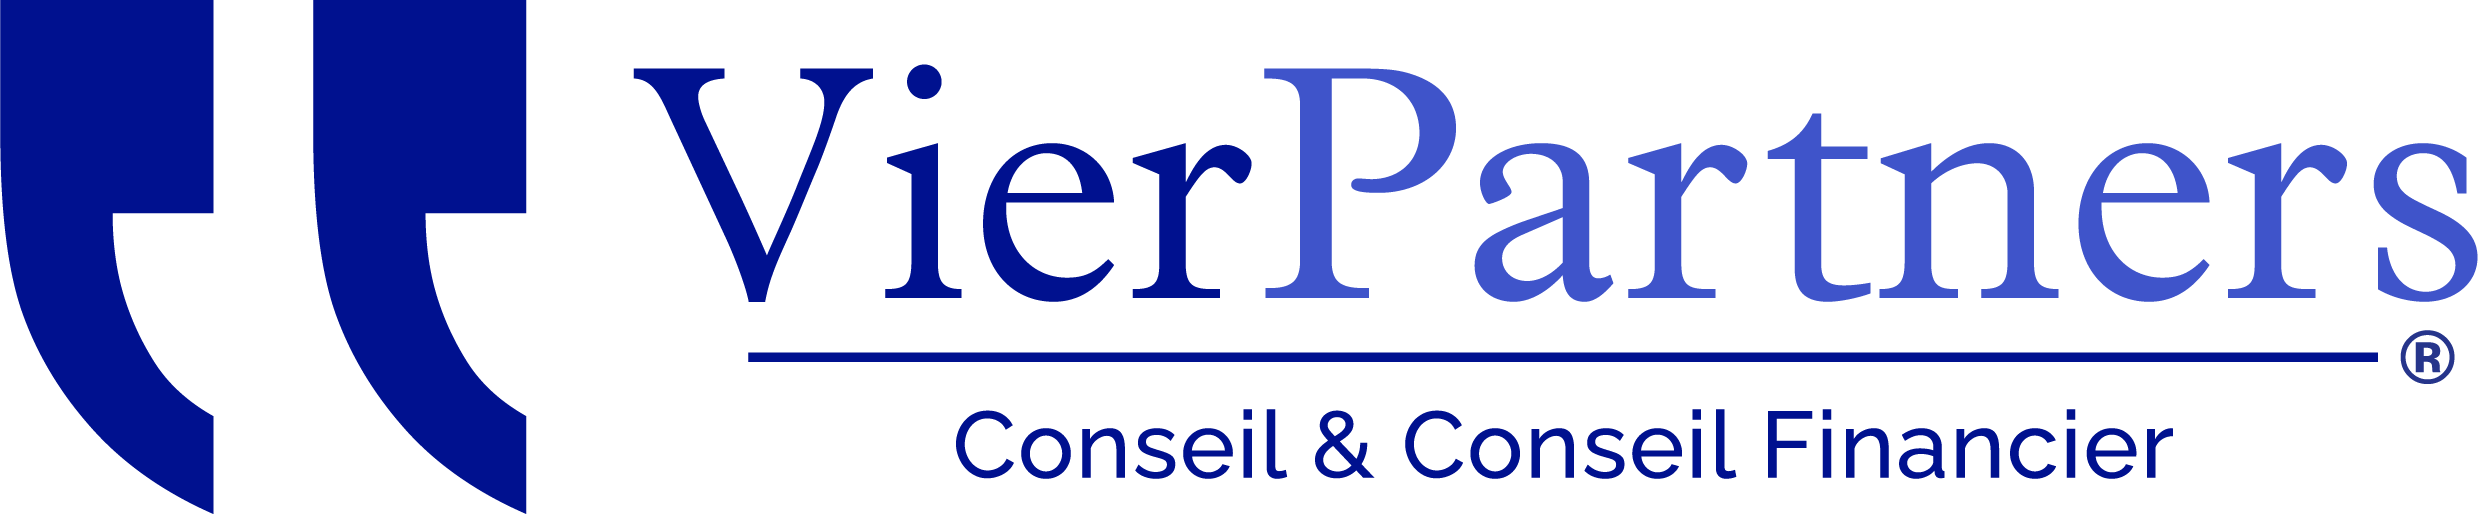 Vier Partners logo